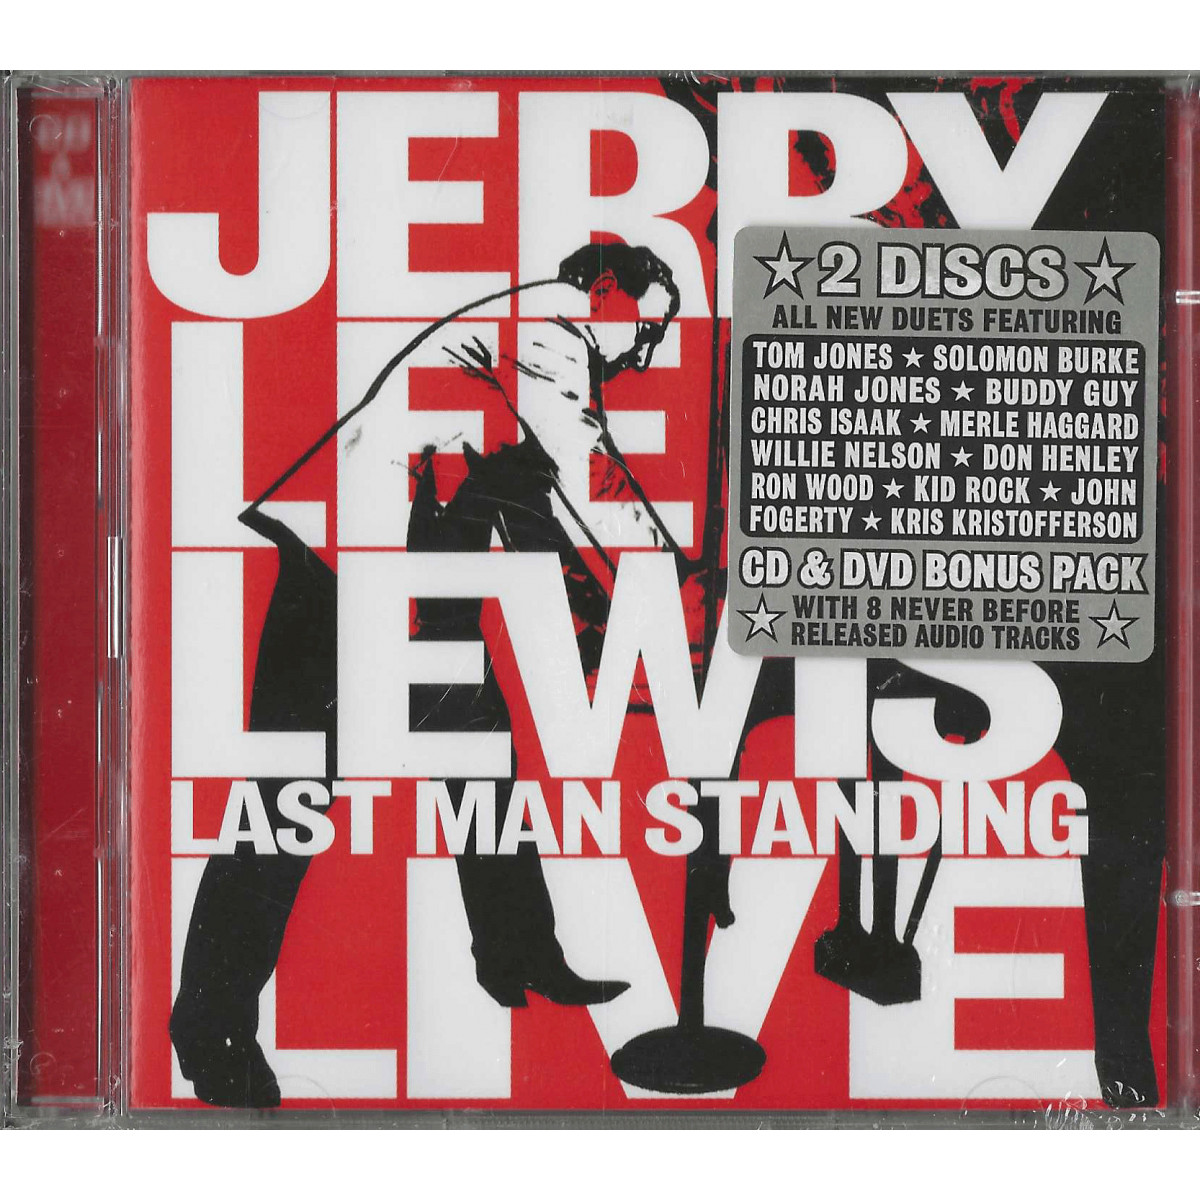 Lewis　Live　Edel　–　Last　Jerry　CD/DVD　Standing　Lee　Man　0180272ERE